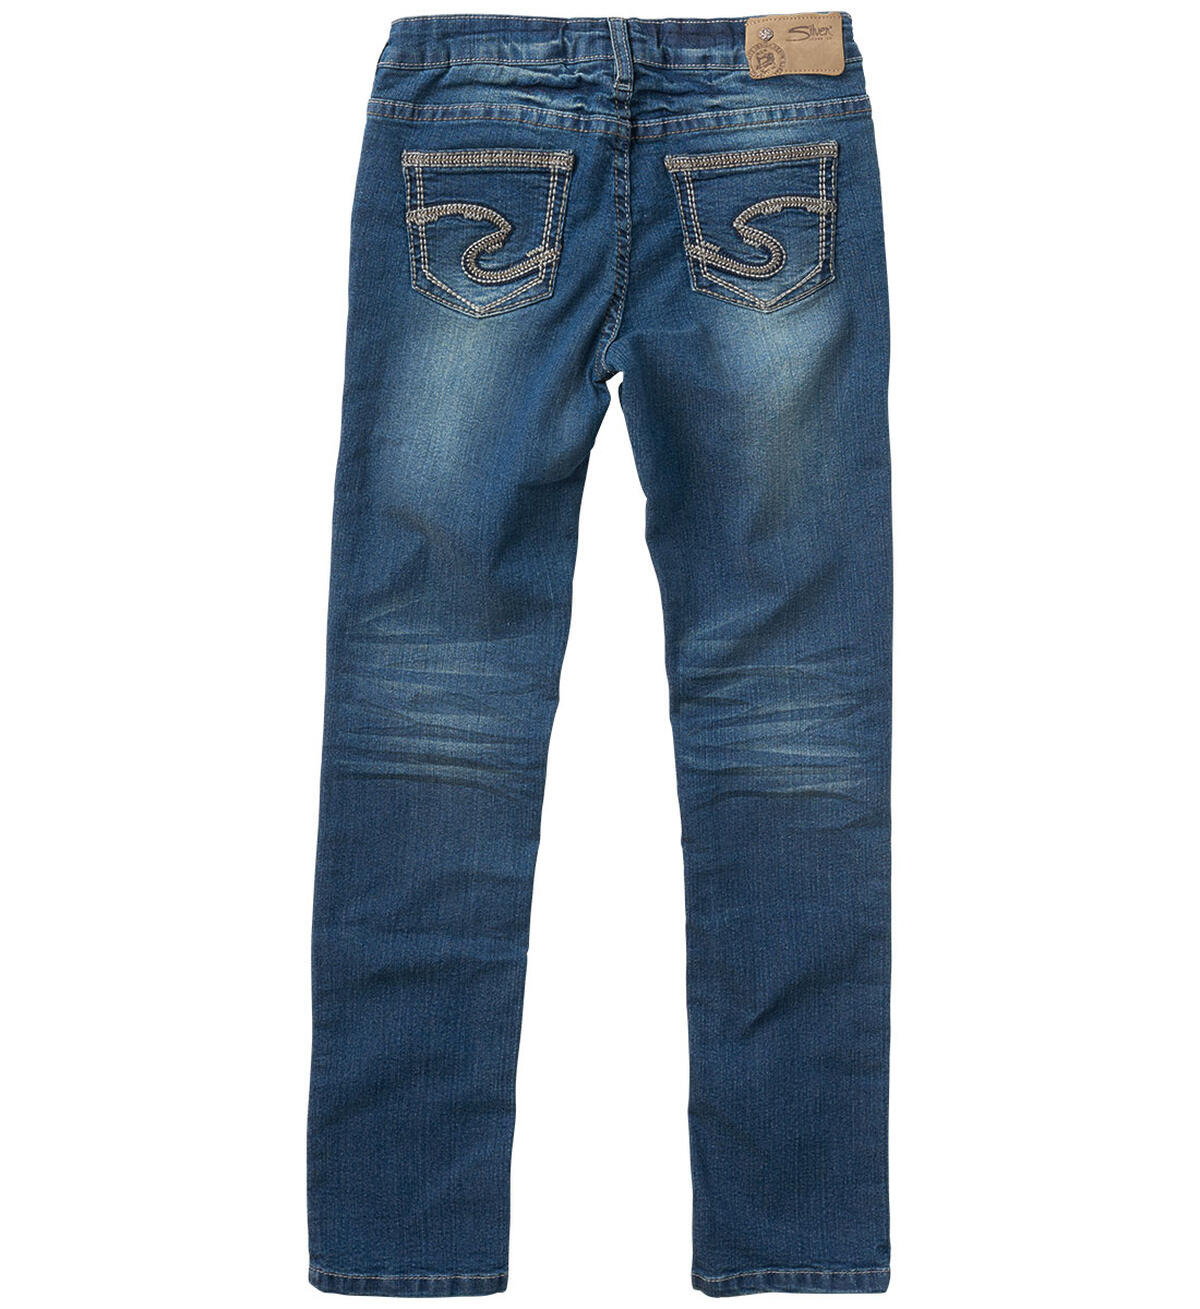 Sasha Skinny Jeans in Dark Wash (4-7), , hi-res image number 1